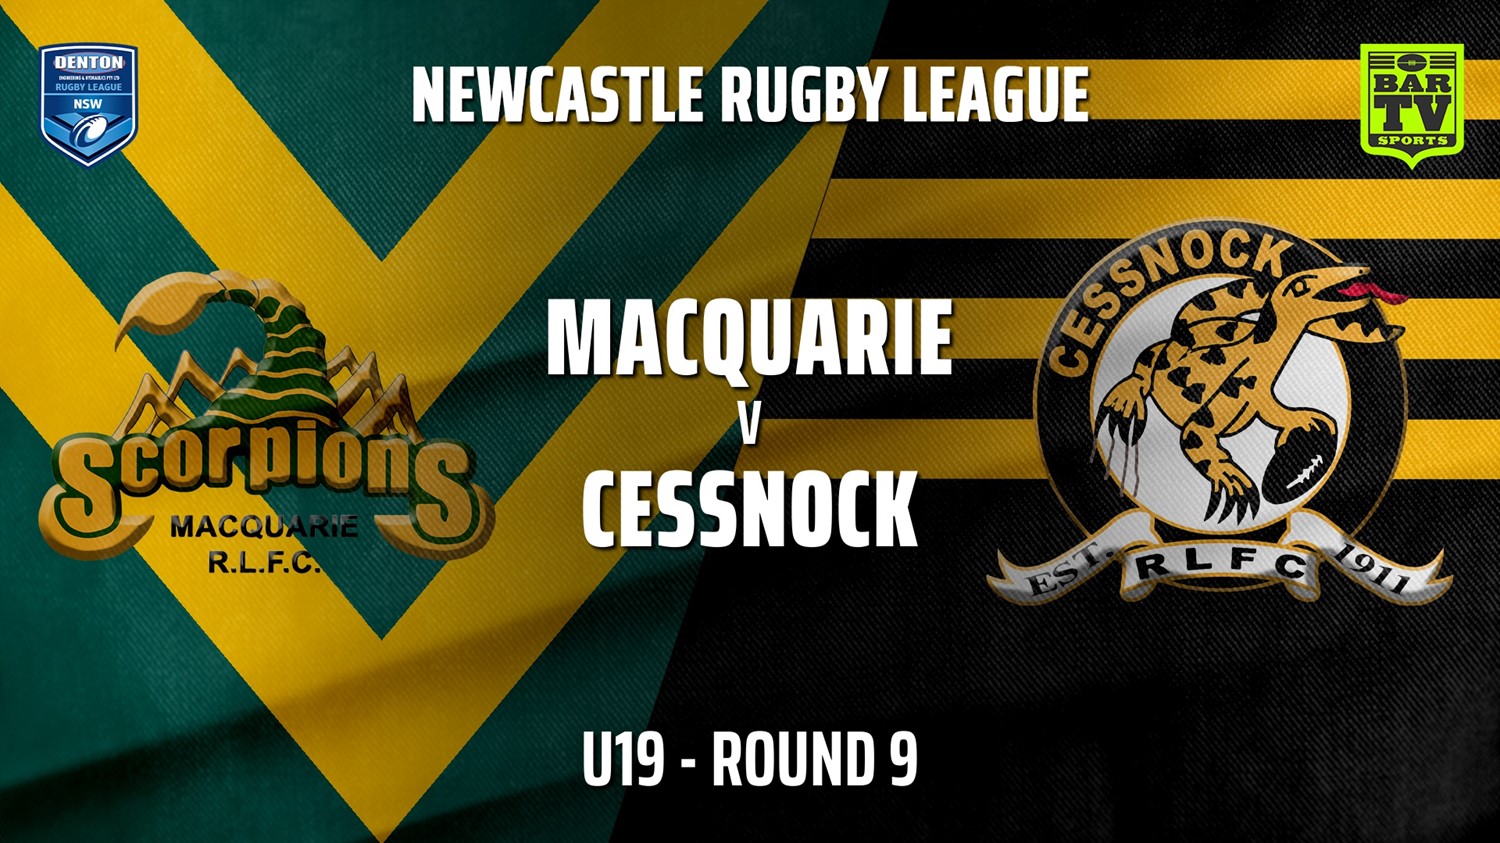 210529-Newcastle Rugby League Round 9 - U19 - Macquarie Scorpions v Cessnock Goannas Slate Image